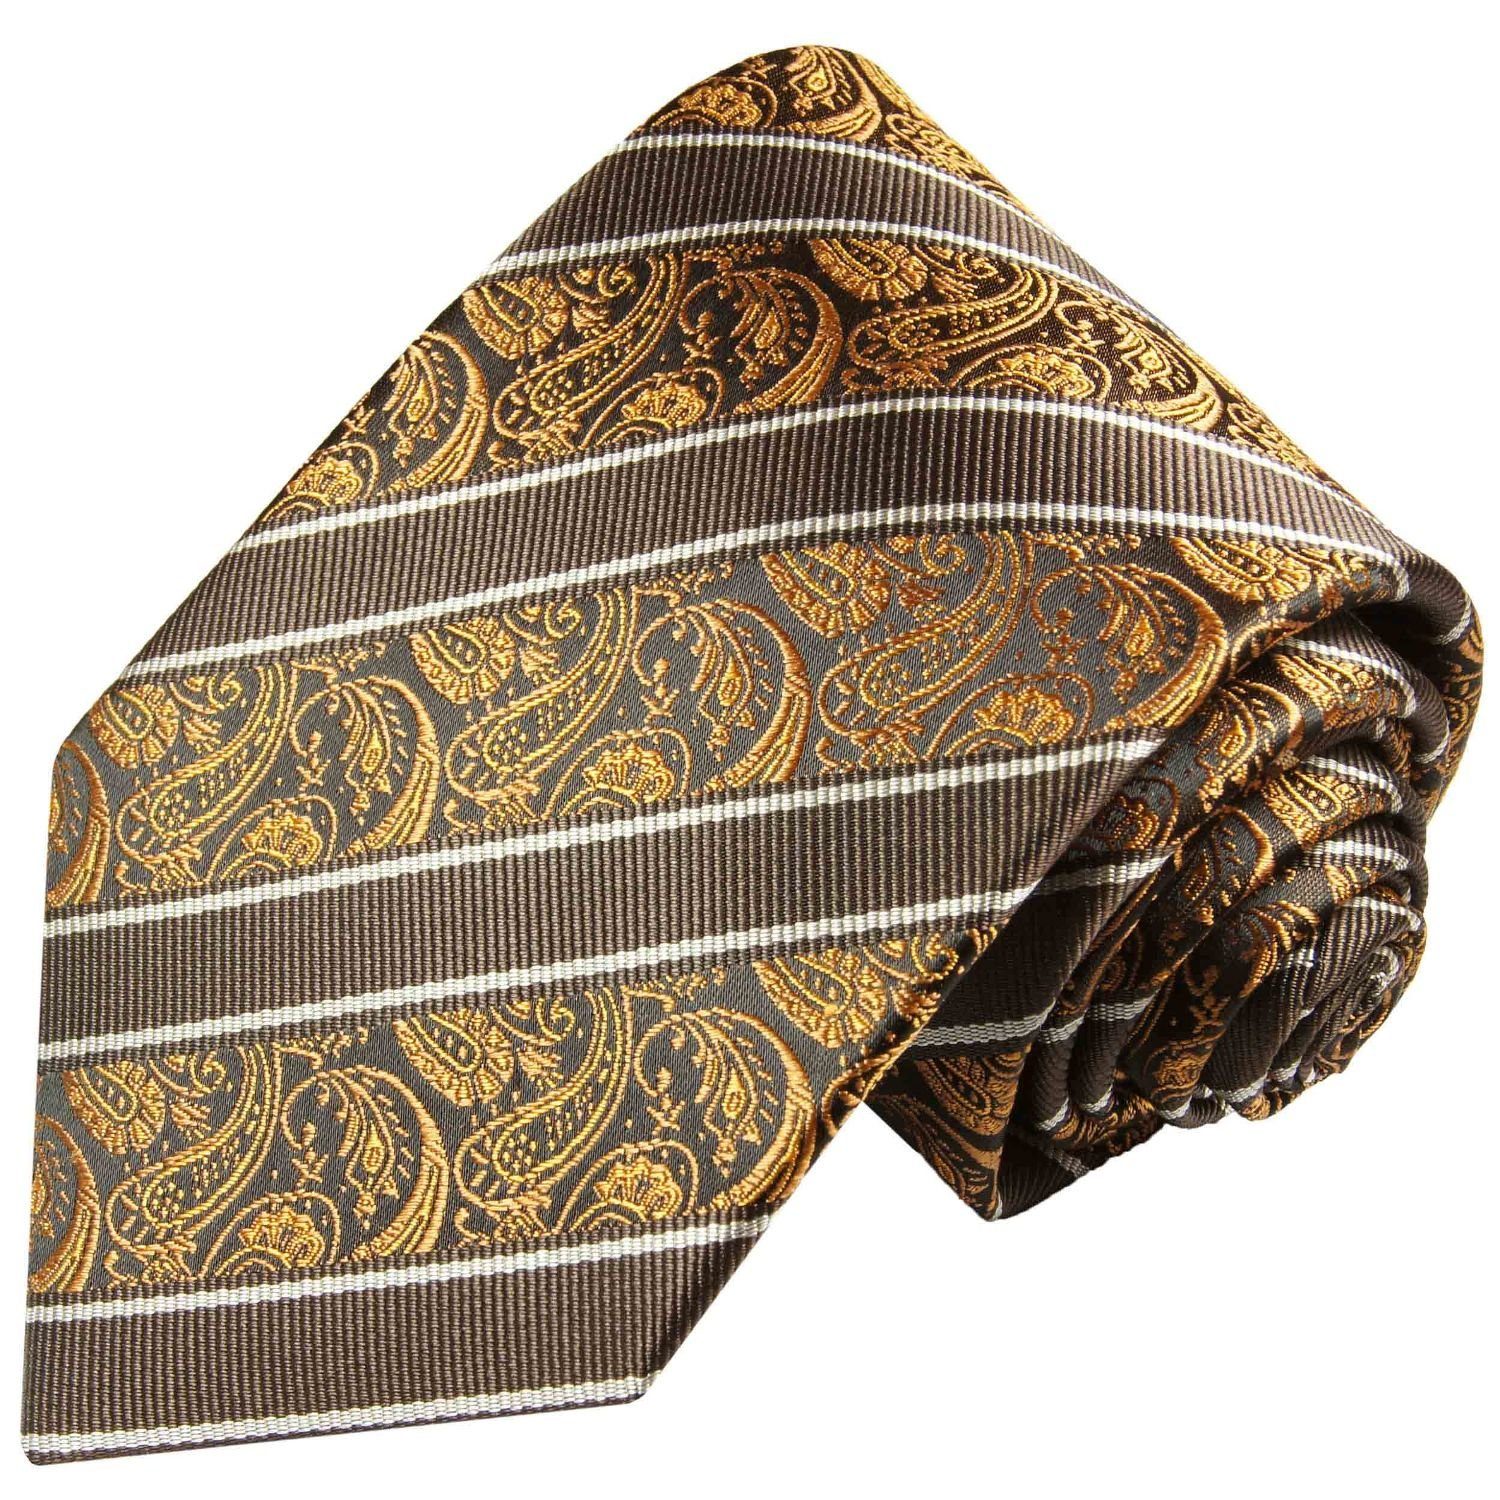 Paul Malone Krawatte Elegante Seidenkrawatte Herren Schlips paisley gestreift 100% Seide Schmal (6cm), braun 392